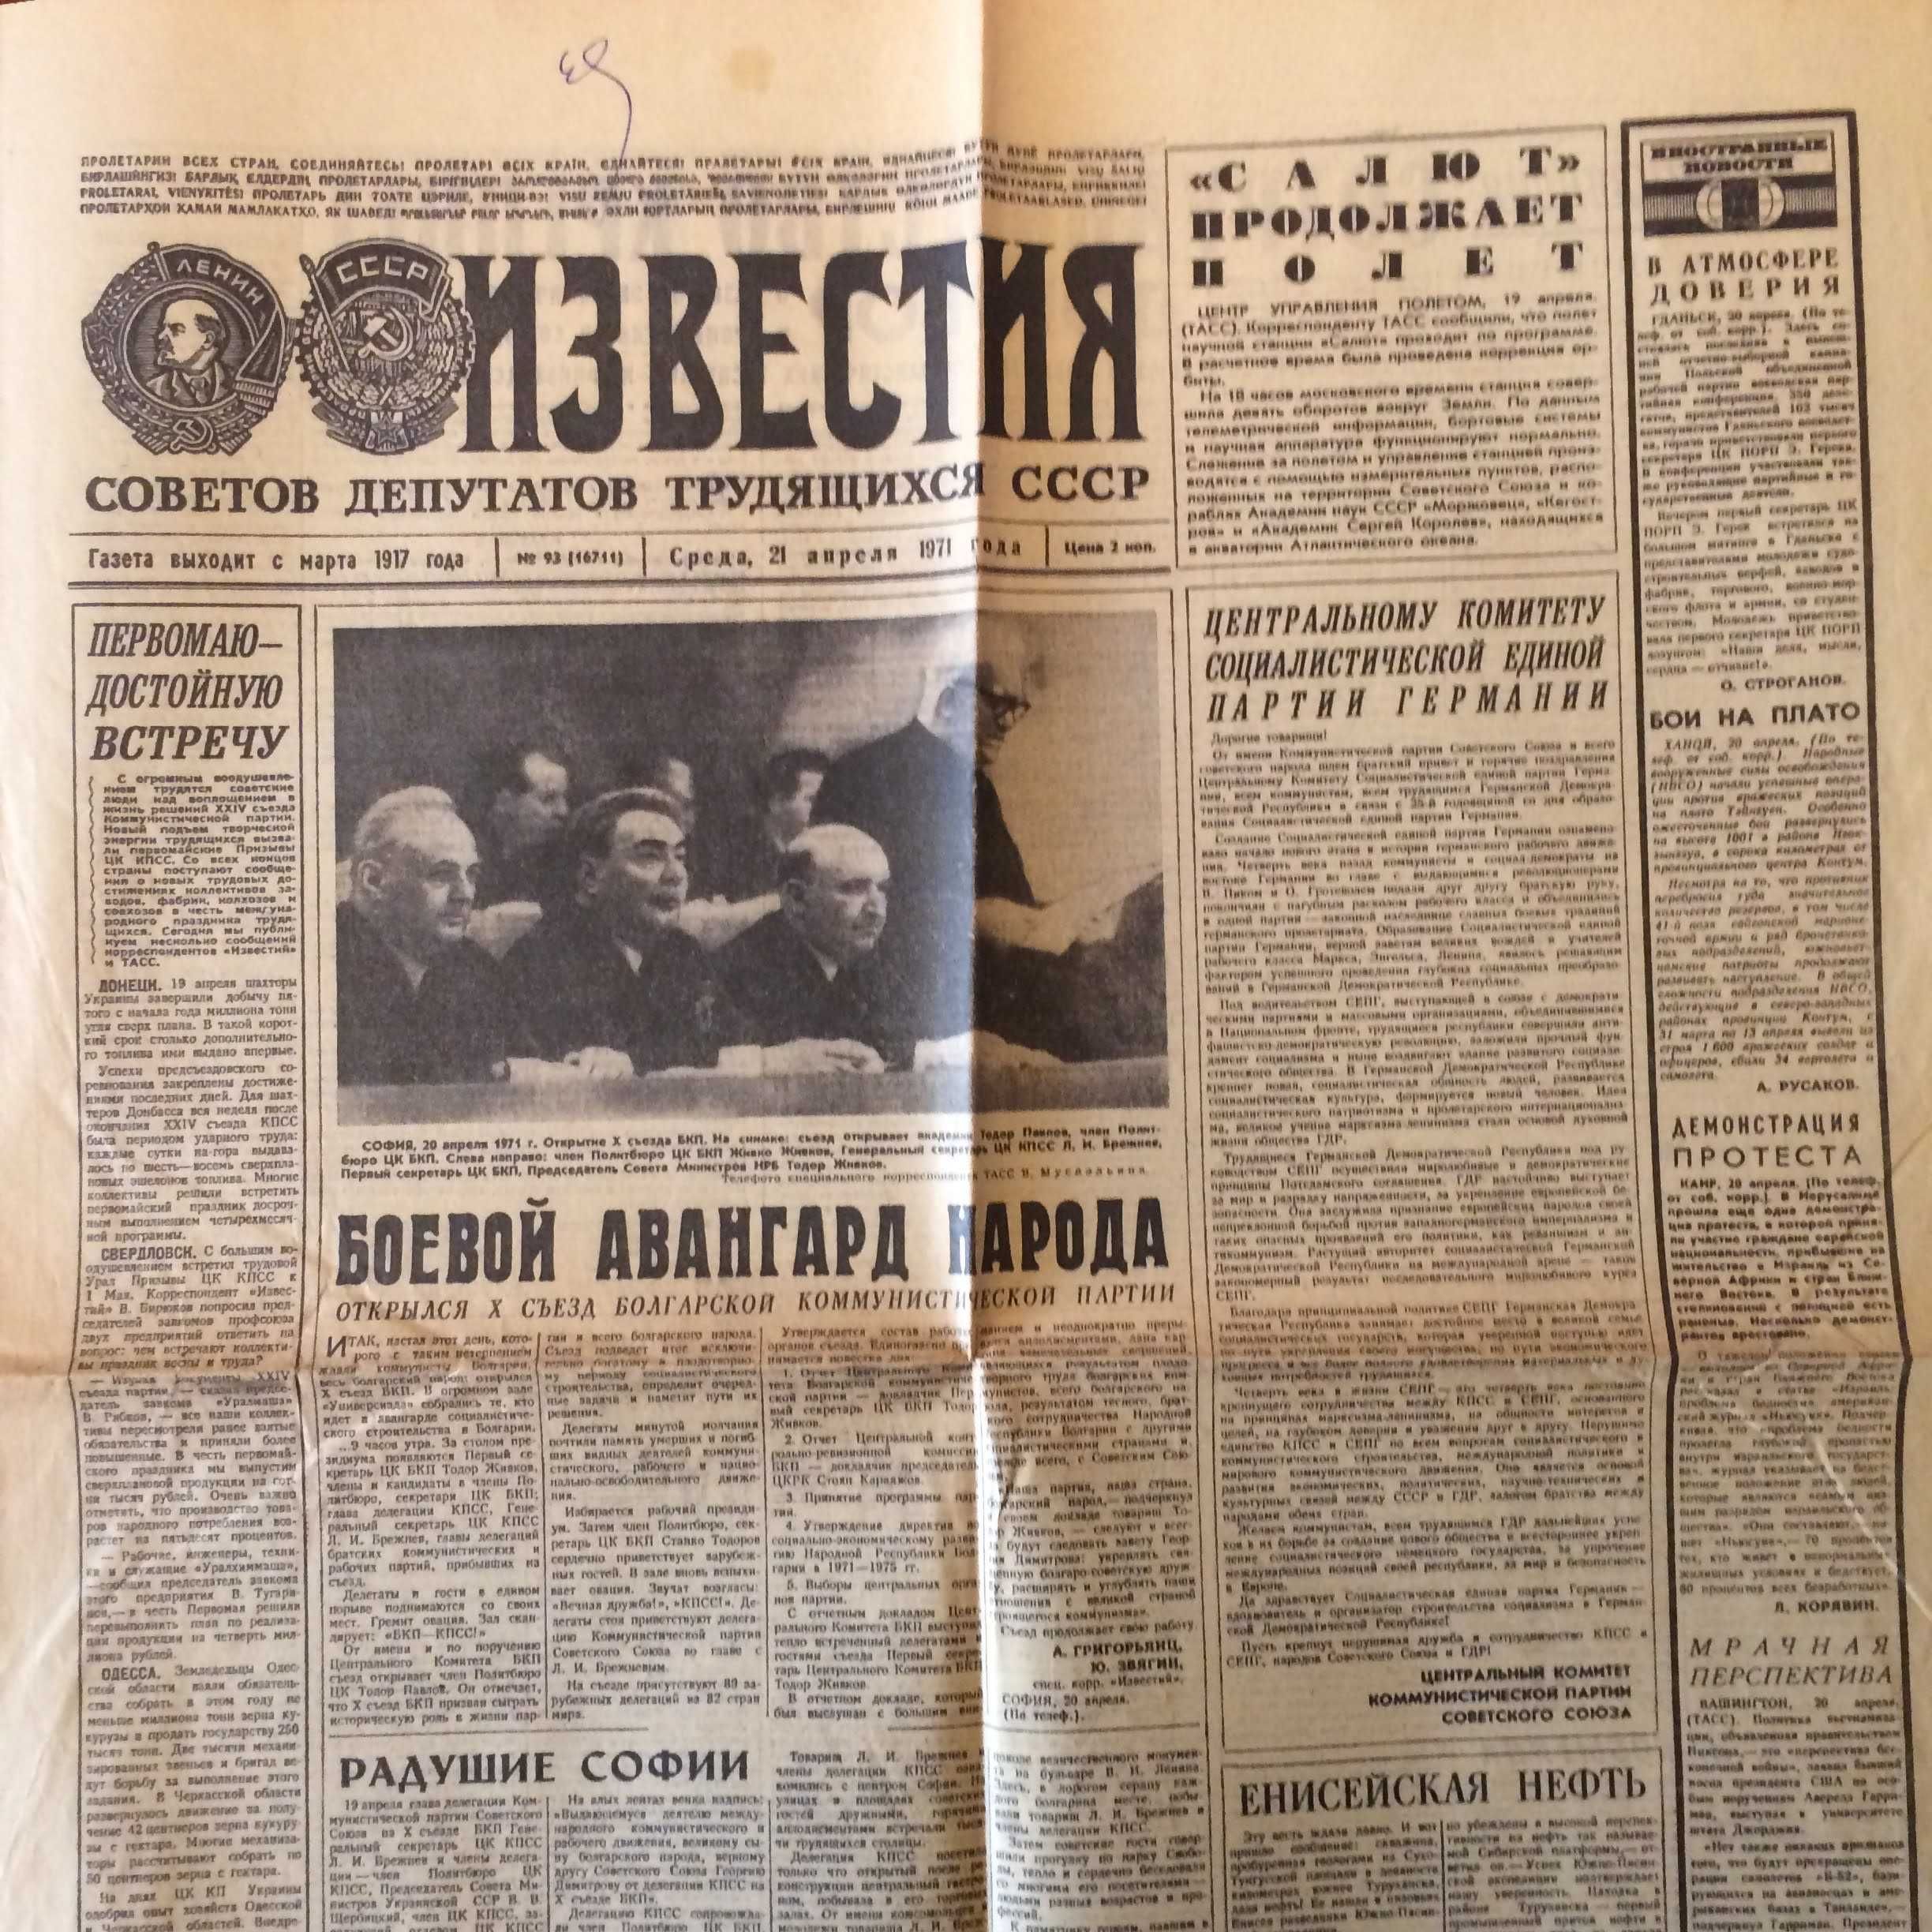 Газета "Известия" от 21 апреля 1971 г. СССР